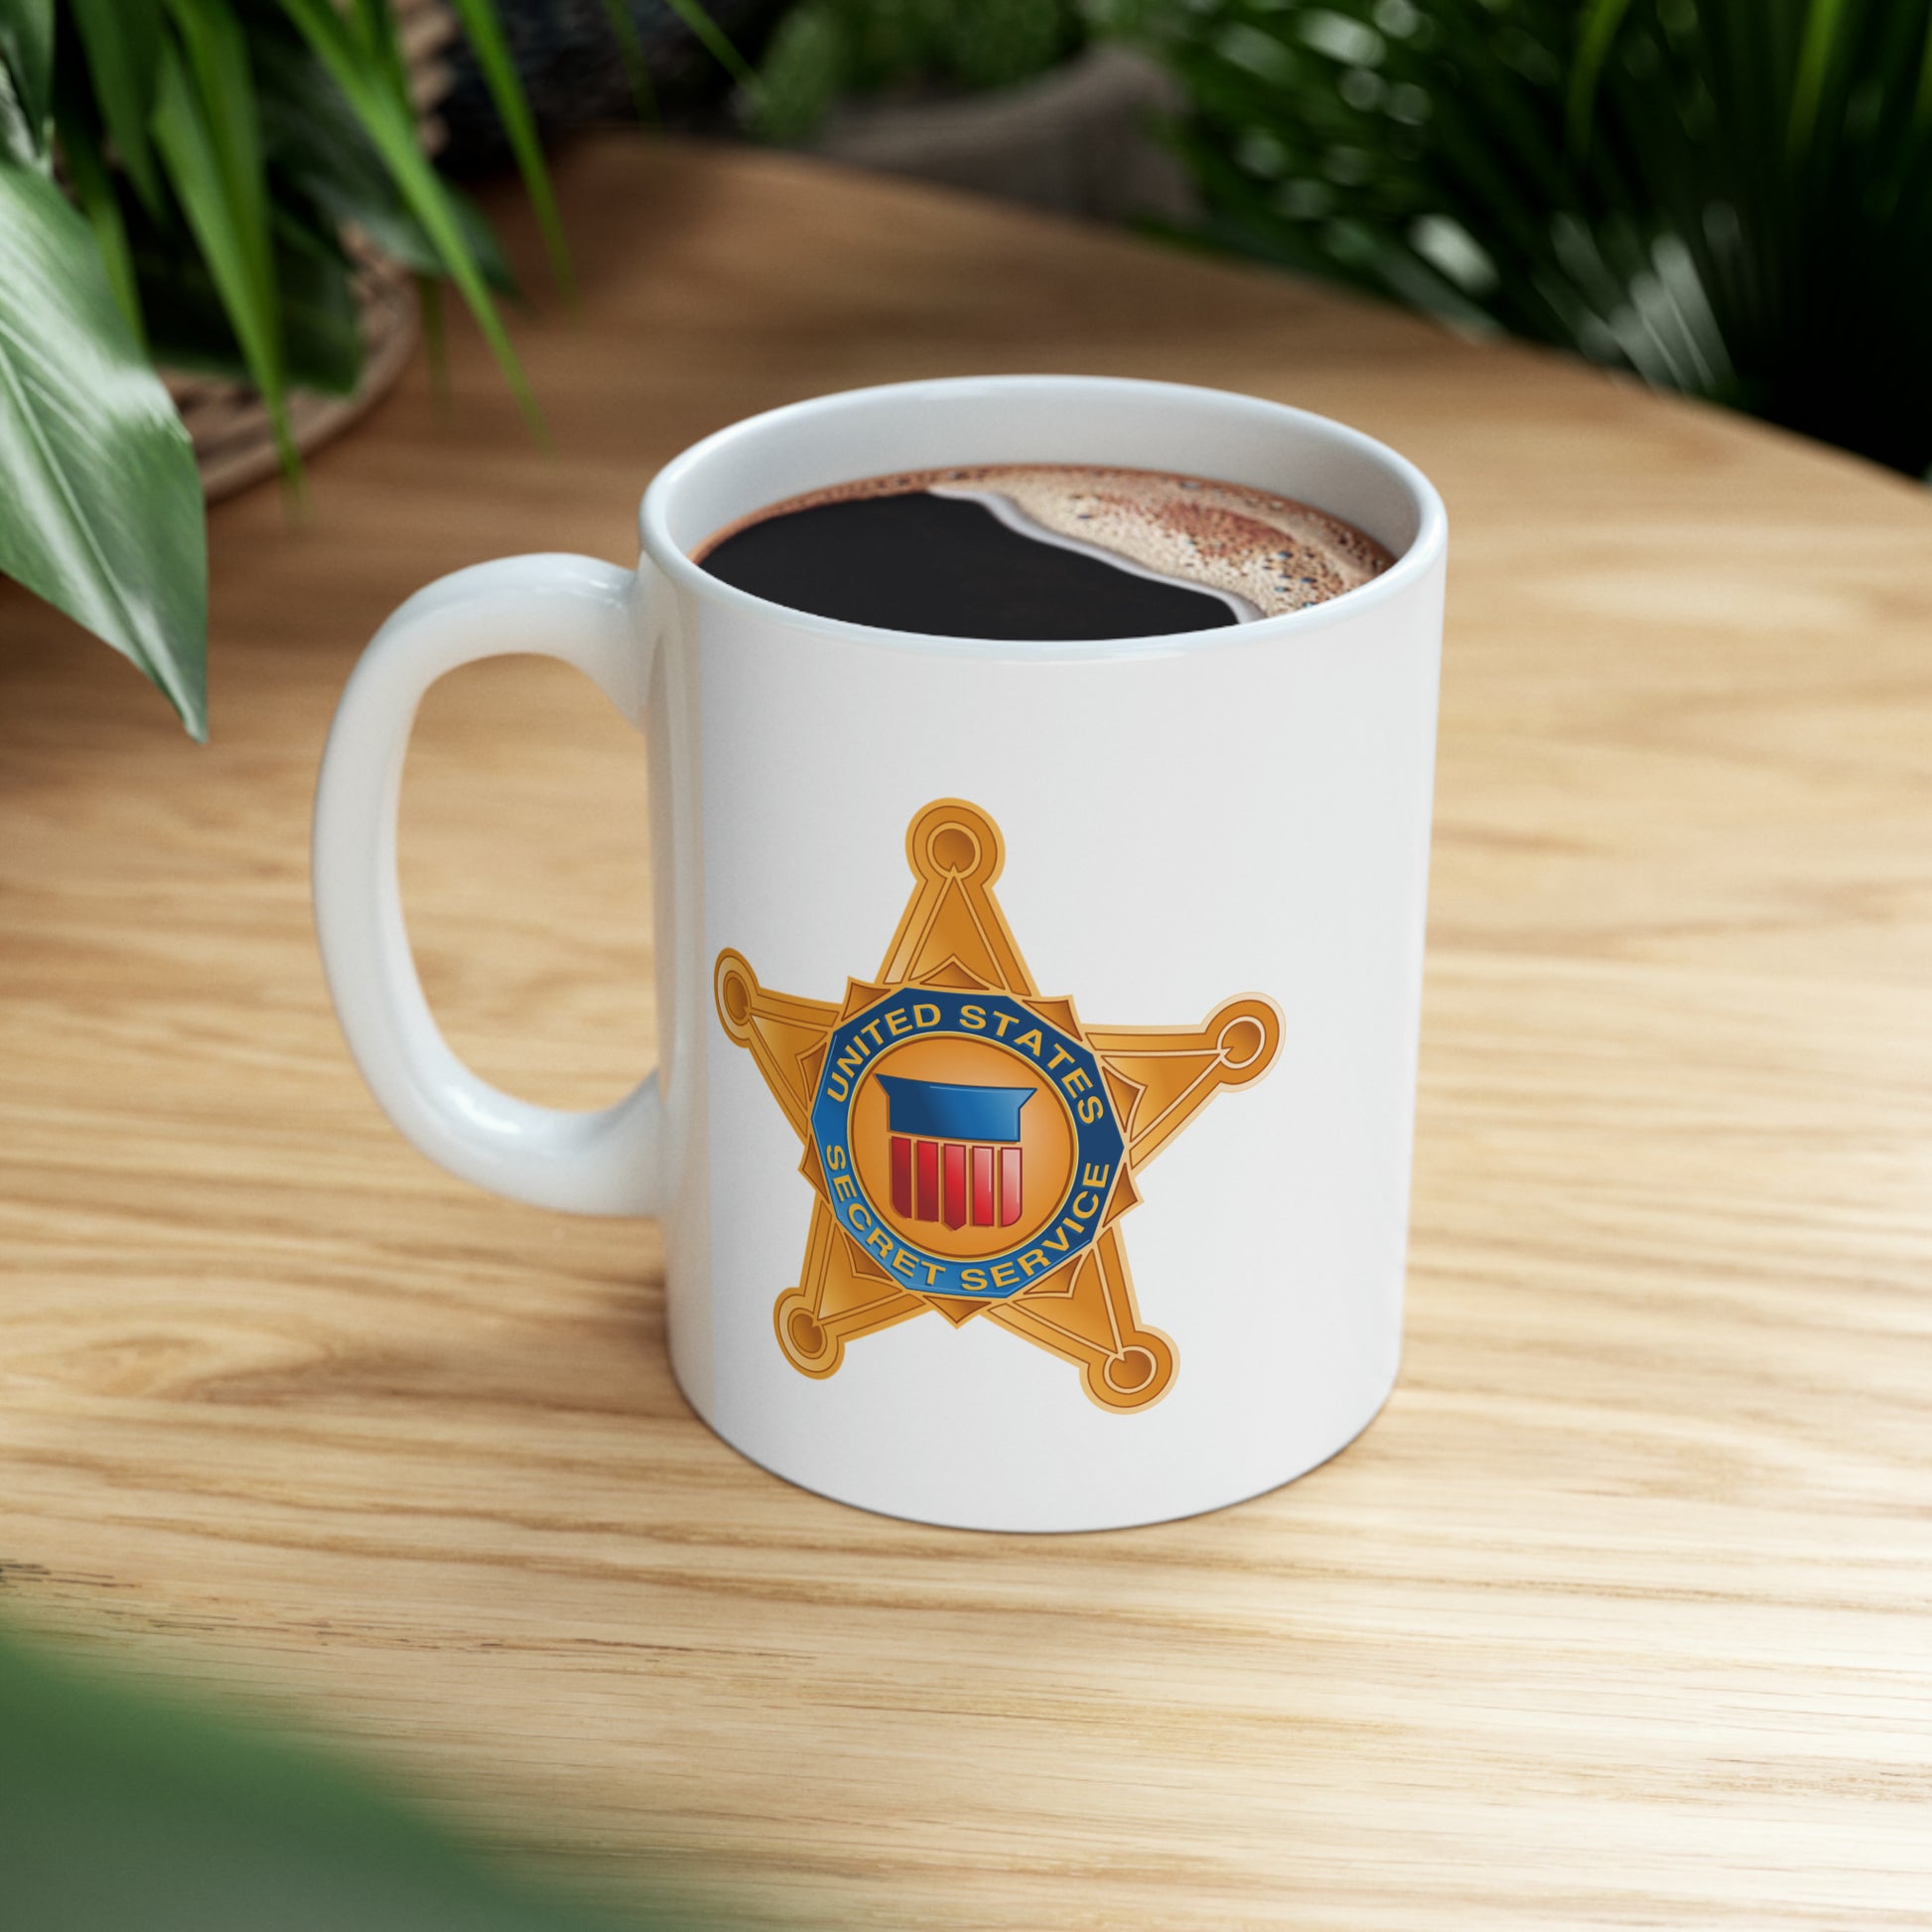 US Secret Service Coffee Mug - Double Sided White Ceramic 11oz by TheGlassyLass.com